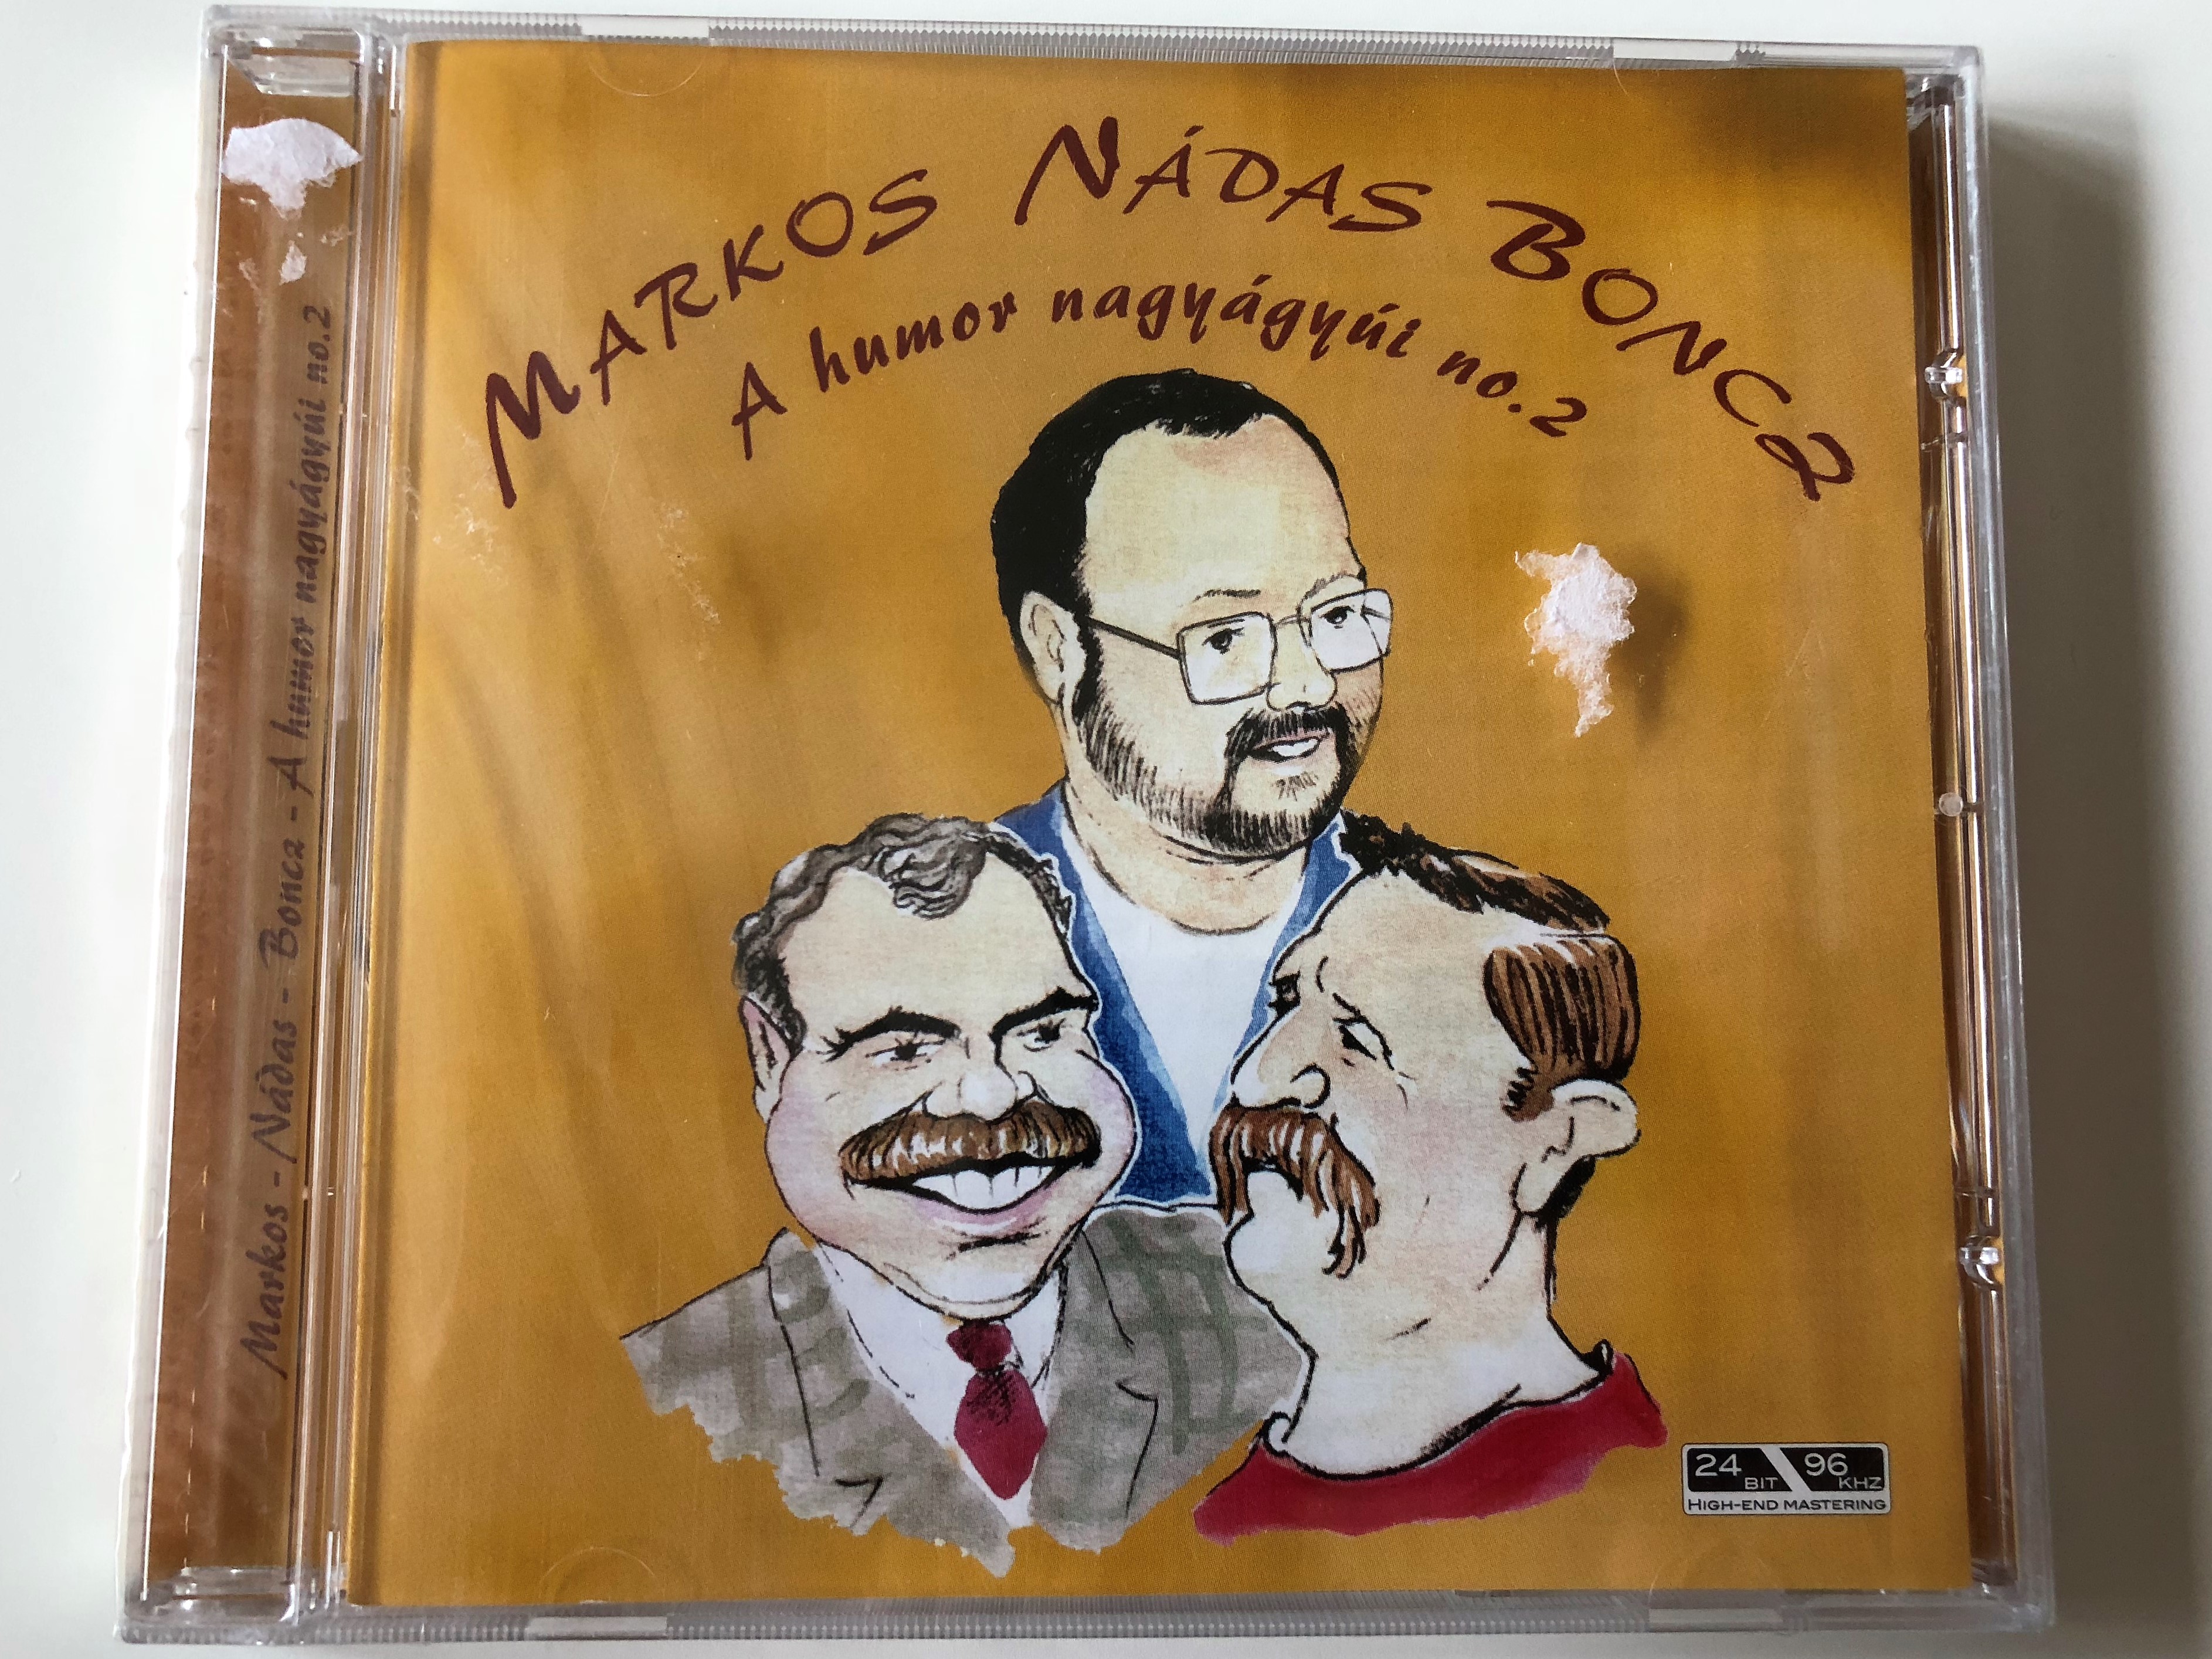 markos-n-das-boncz-a-humor-nagy-gy-i-no.-2-cd-2005-the-hotshots-of-humor-no.2-hungarian-comedy-parody-1-.jpg